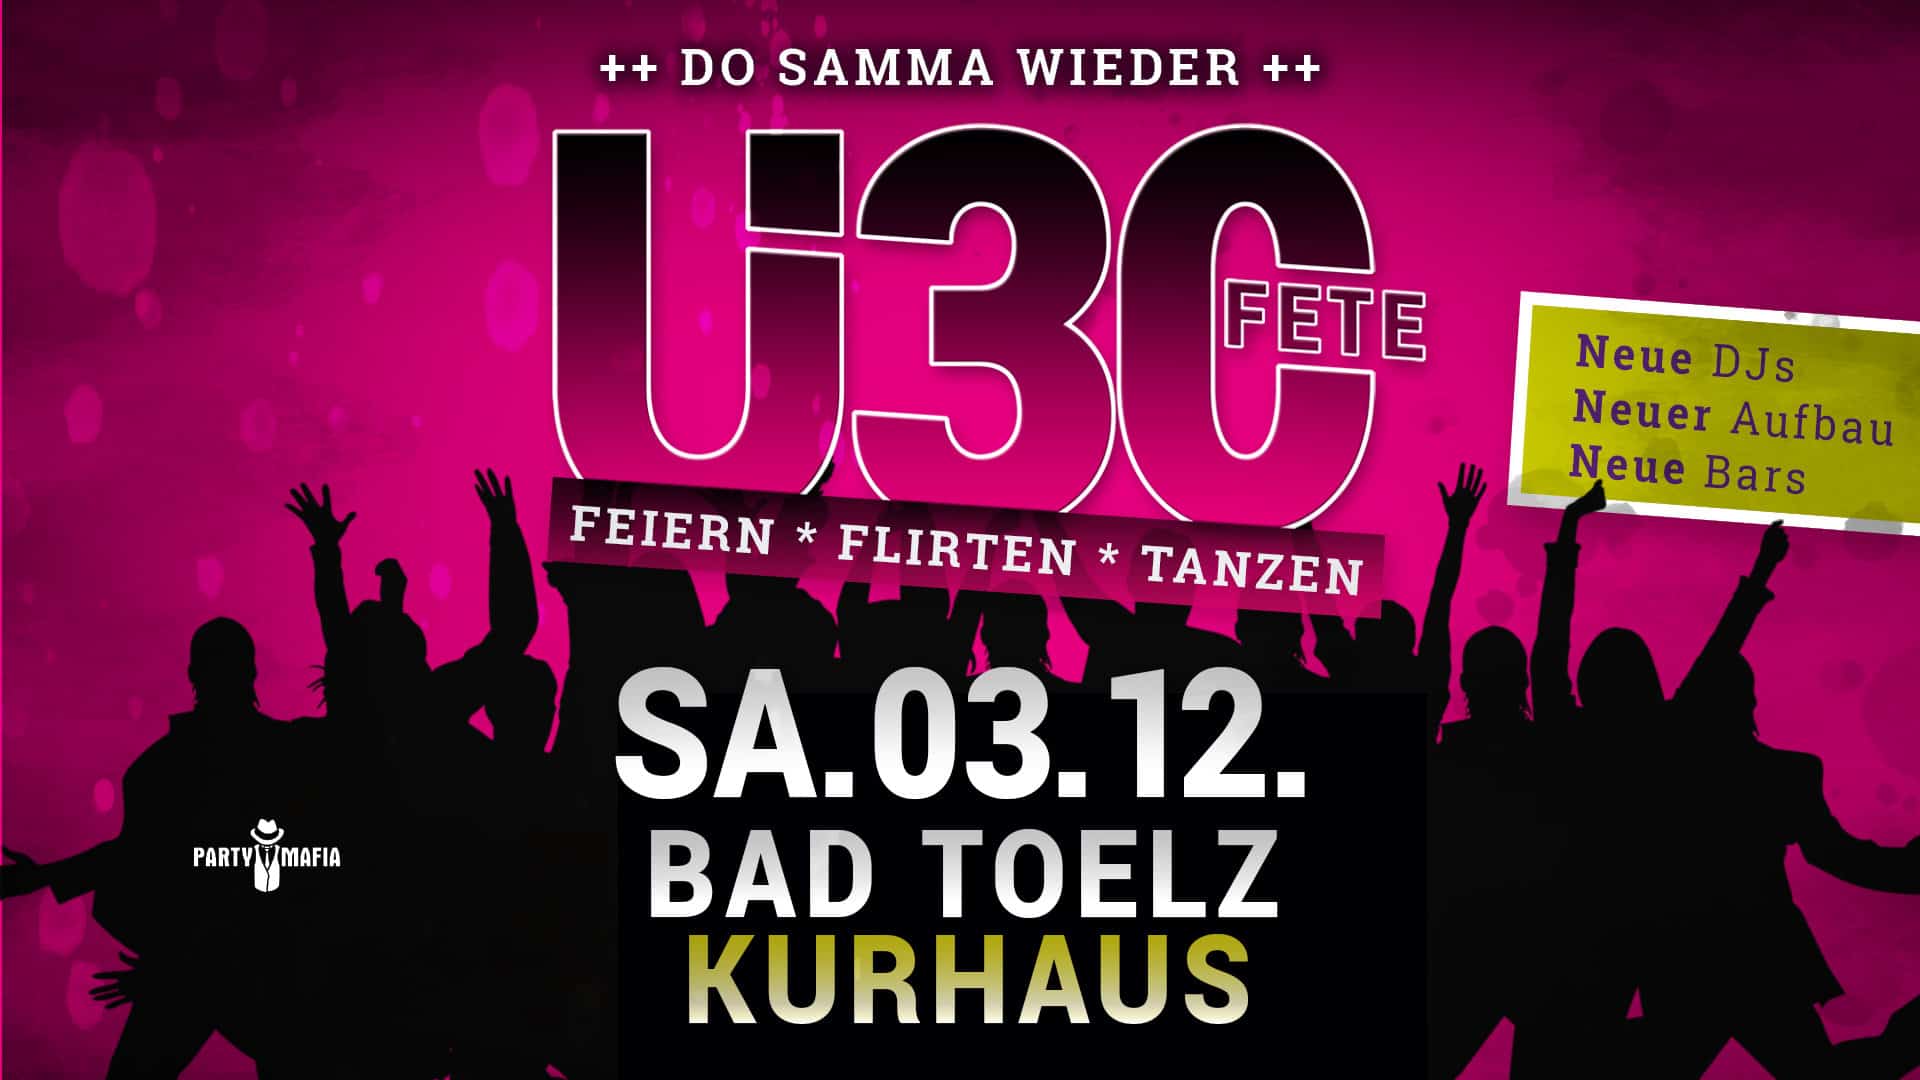 Ü30 Party Highlight, Kultparty in Bad Tölz: Die neue Ü30 FETE